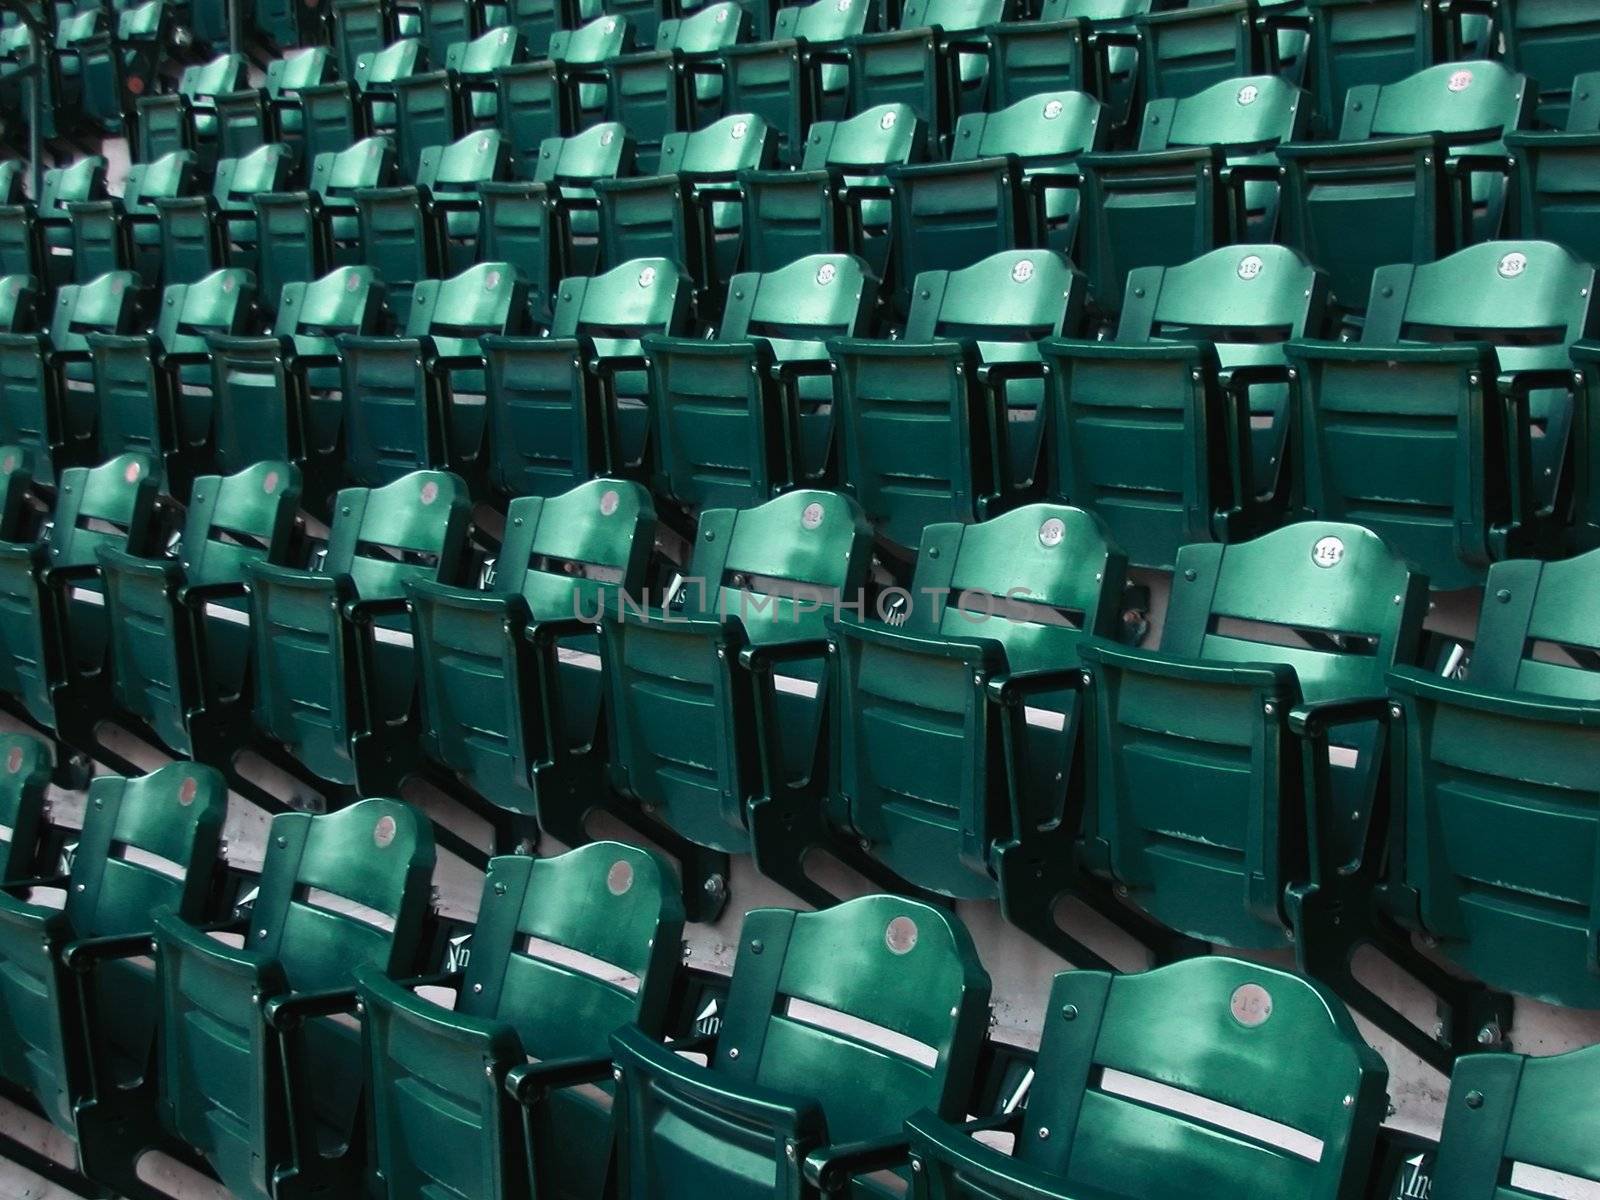 Rows of Bleacher Seats at Major League Ball Park